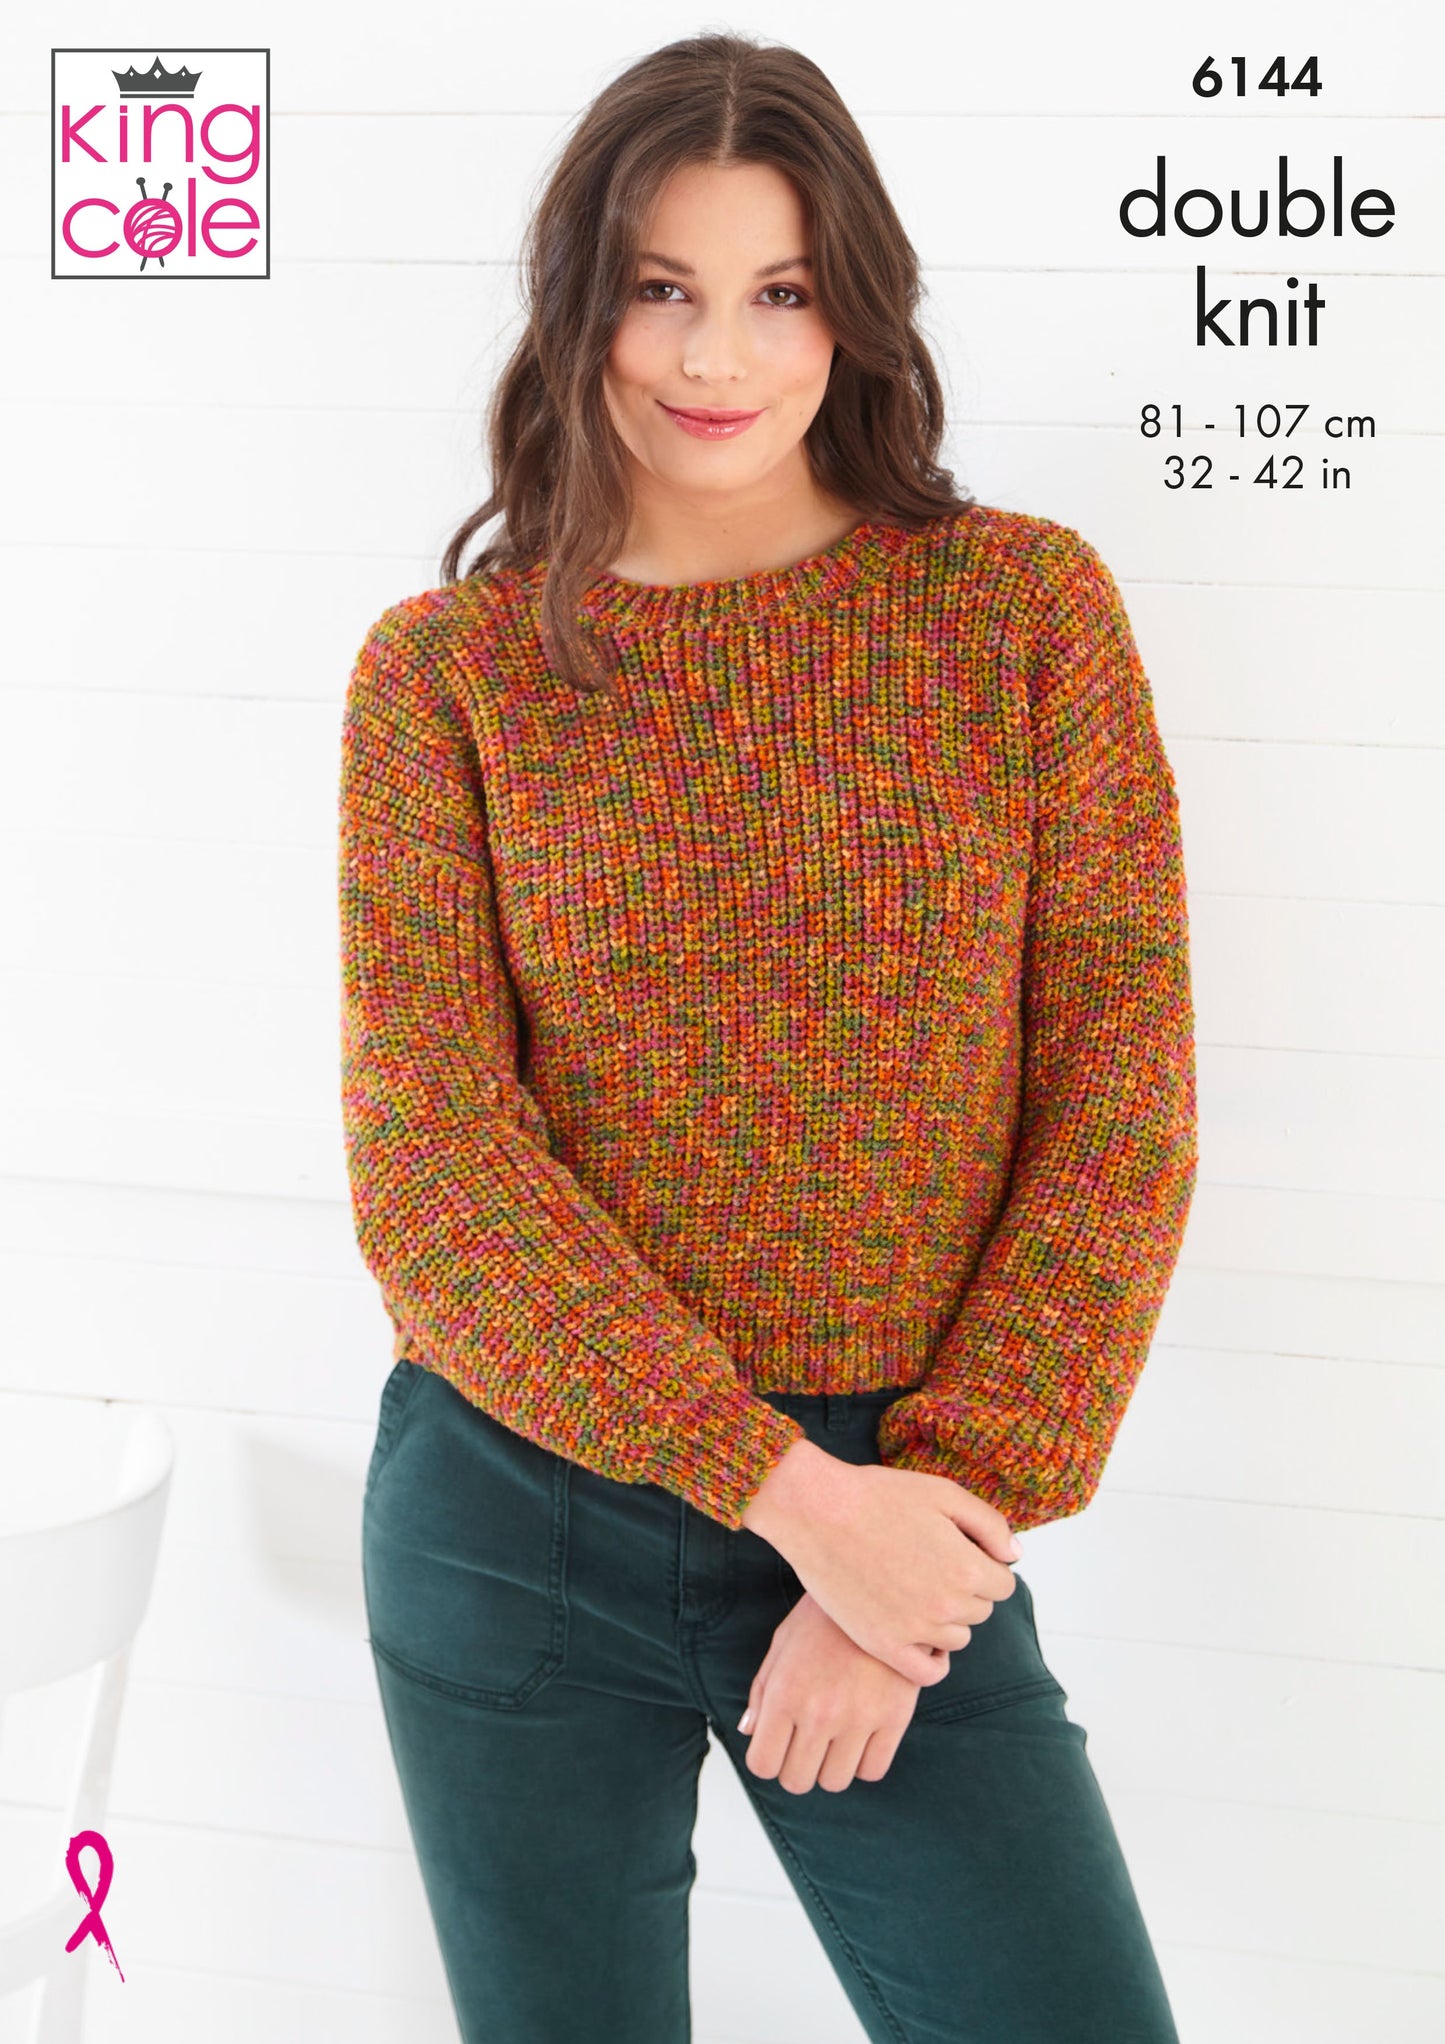 Knitting Pattern 6144 - Sweater & Top Knitted in Jitterbug DK